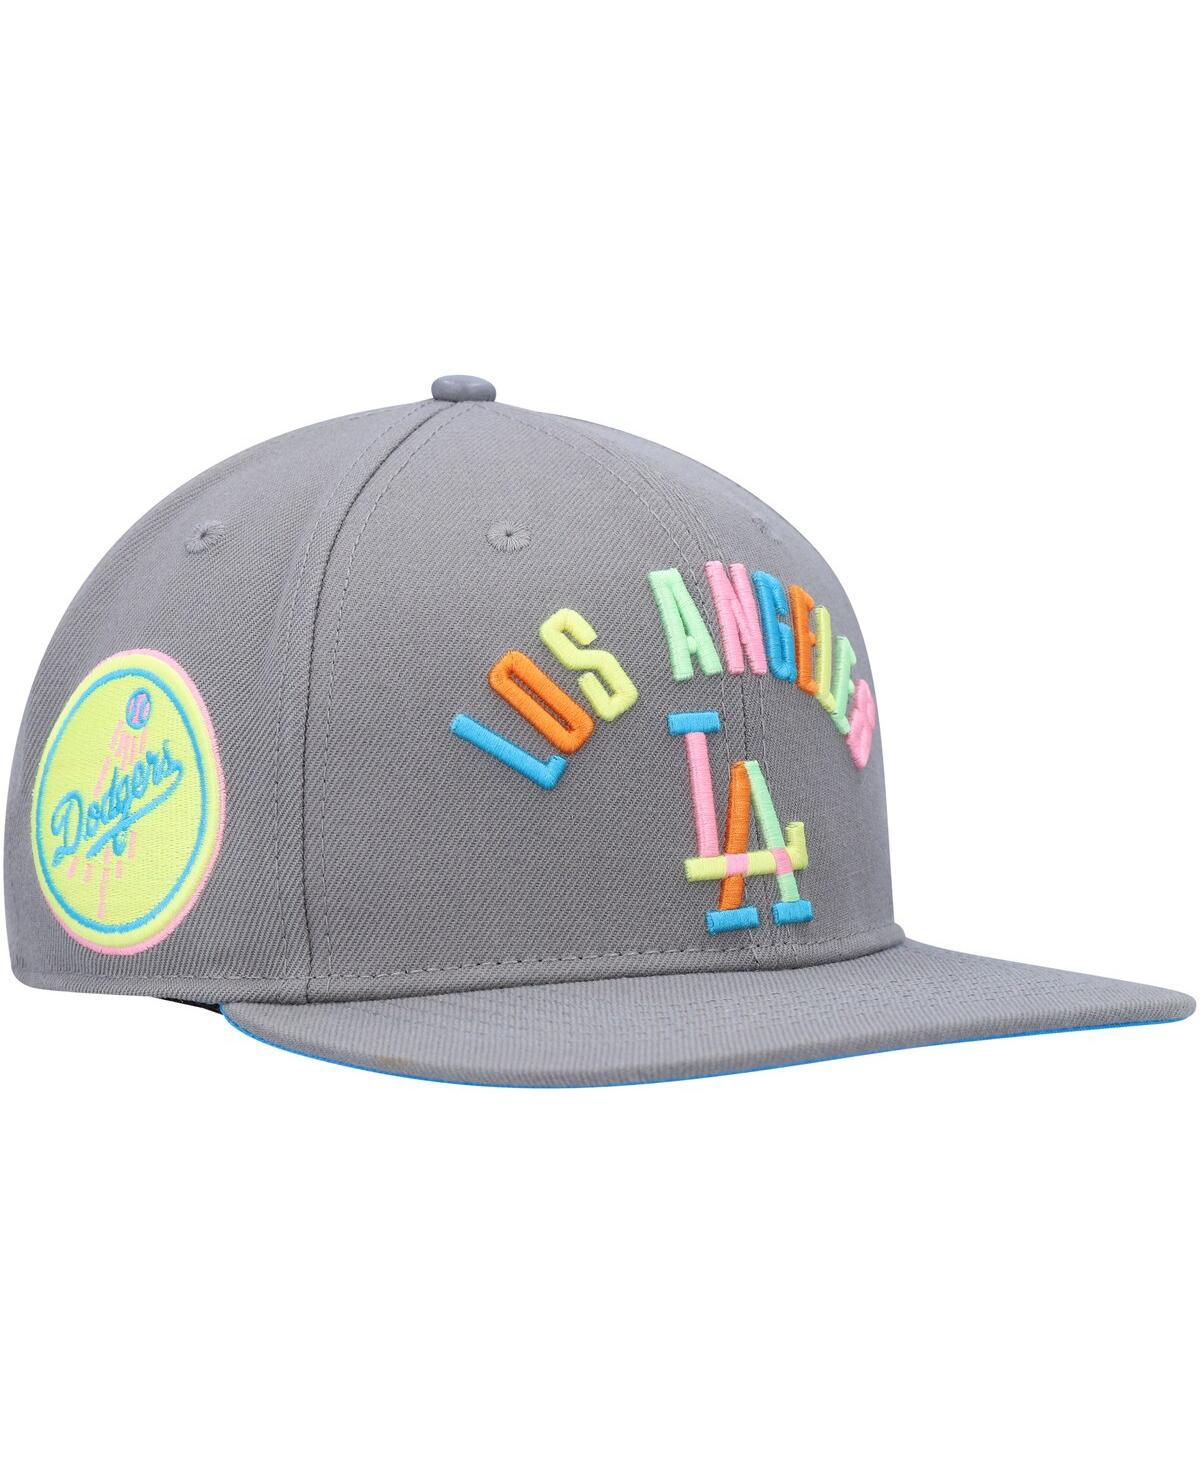 Shop Pro Standard Men's  Gray Los Angeles Dodgers Washed Neon Snapback Hat